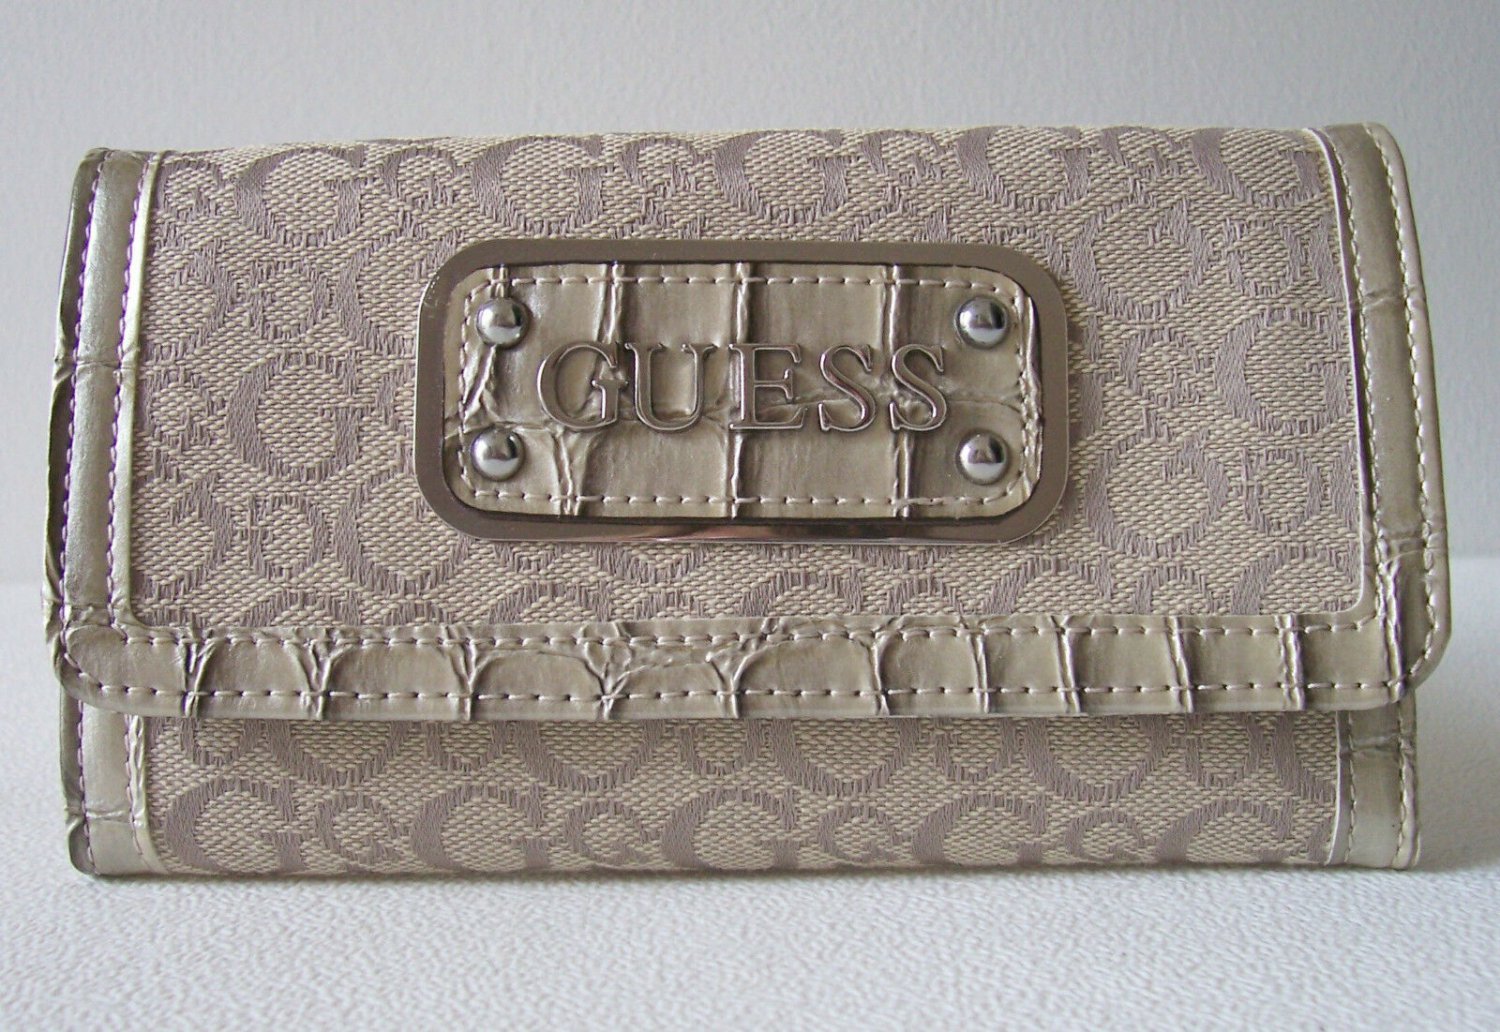 Guess Network SLG Slim Clutch Wallet Purse 3.5" x 6.5" (Stone)